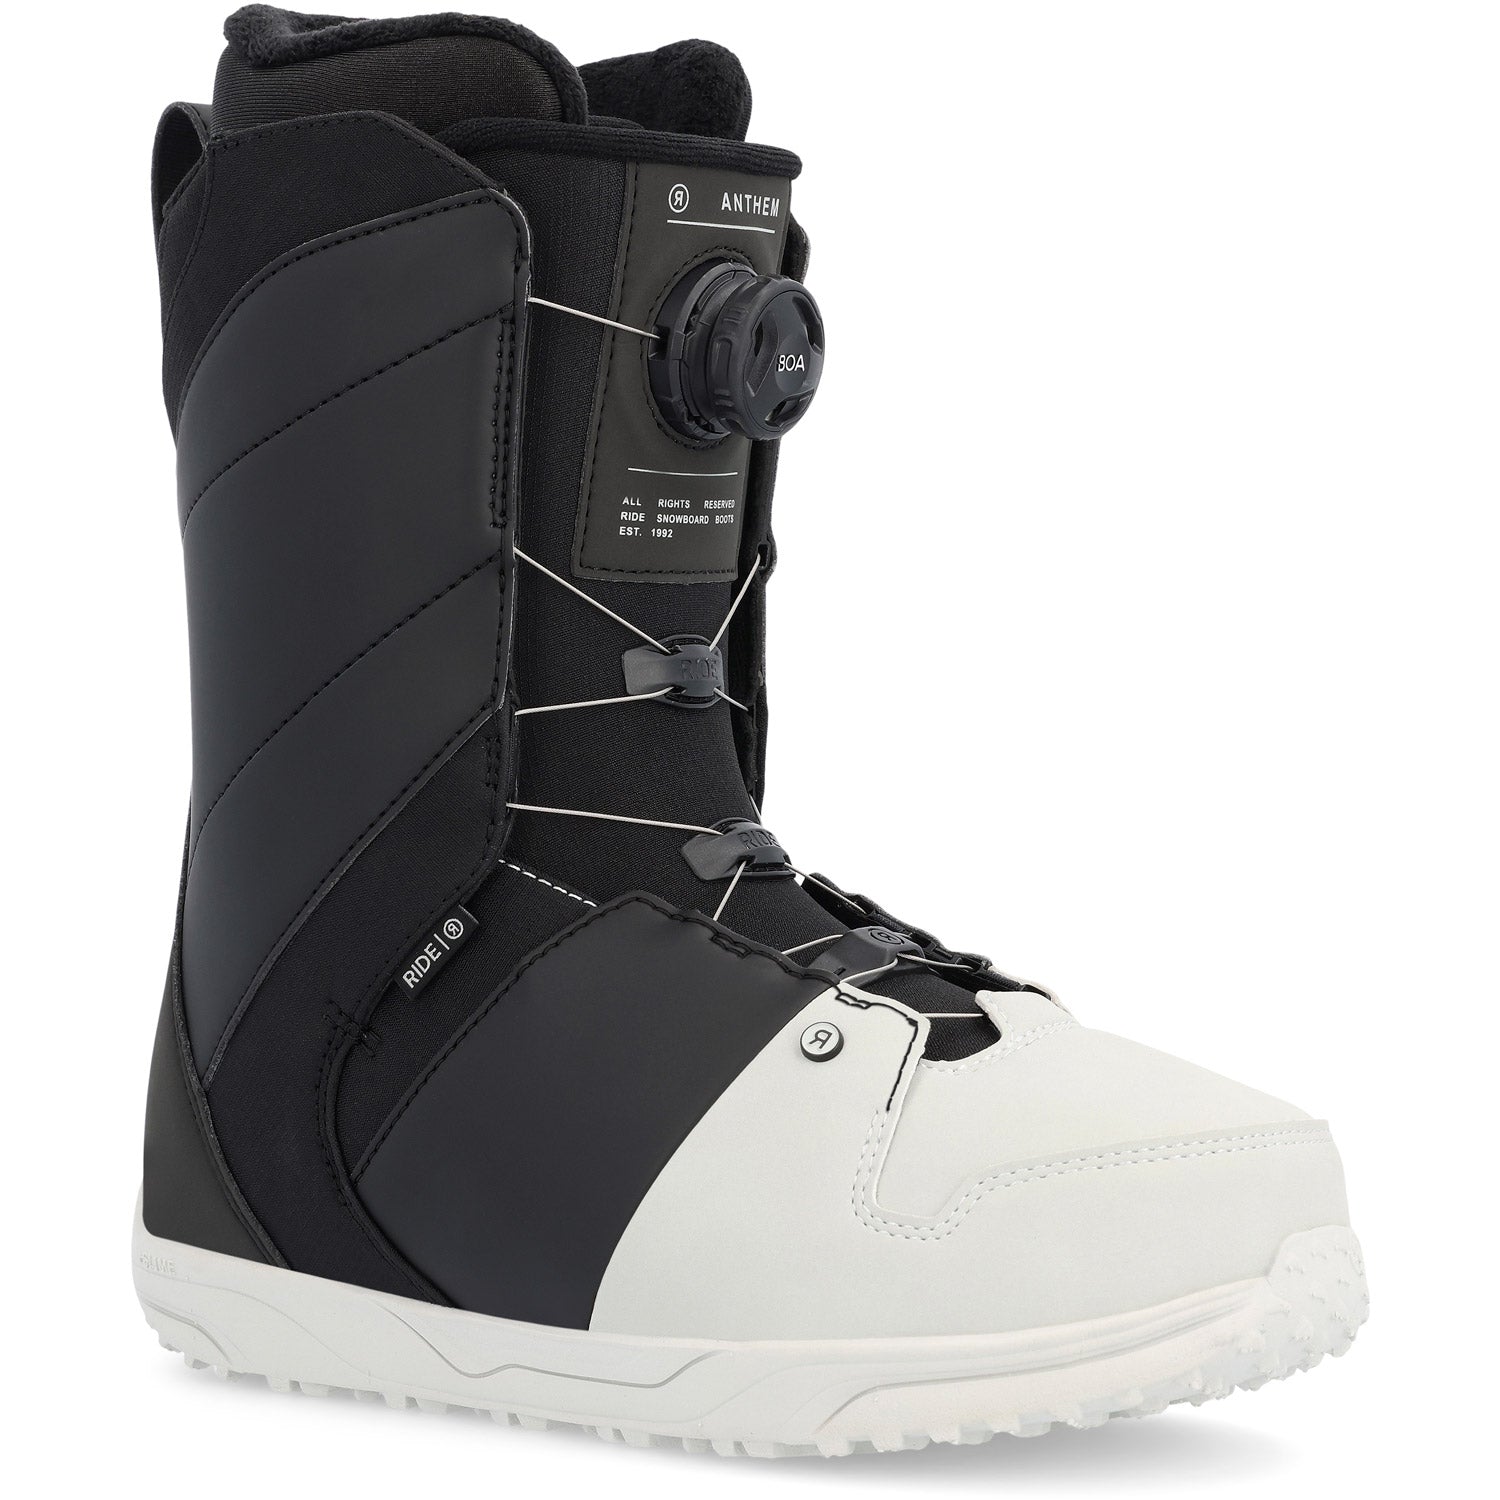 Anthem Snowboard Boots